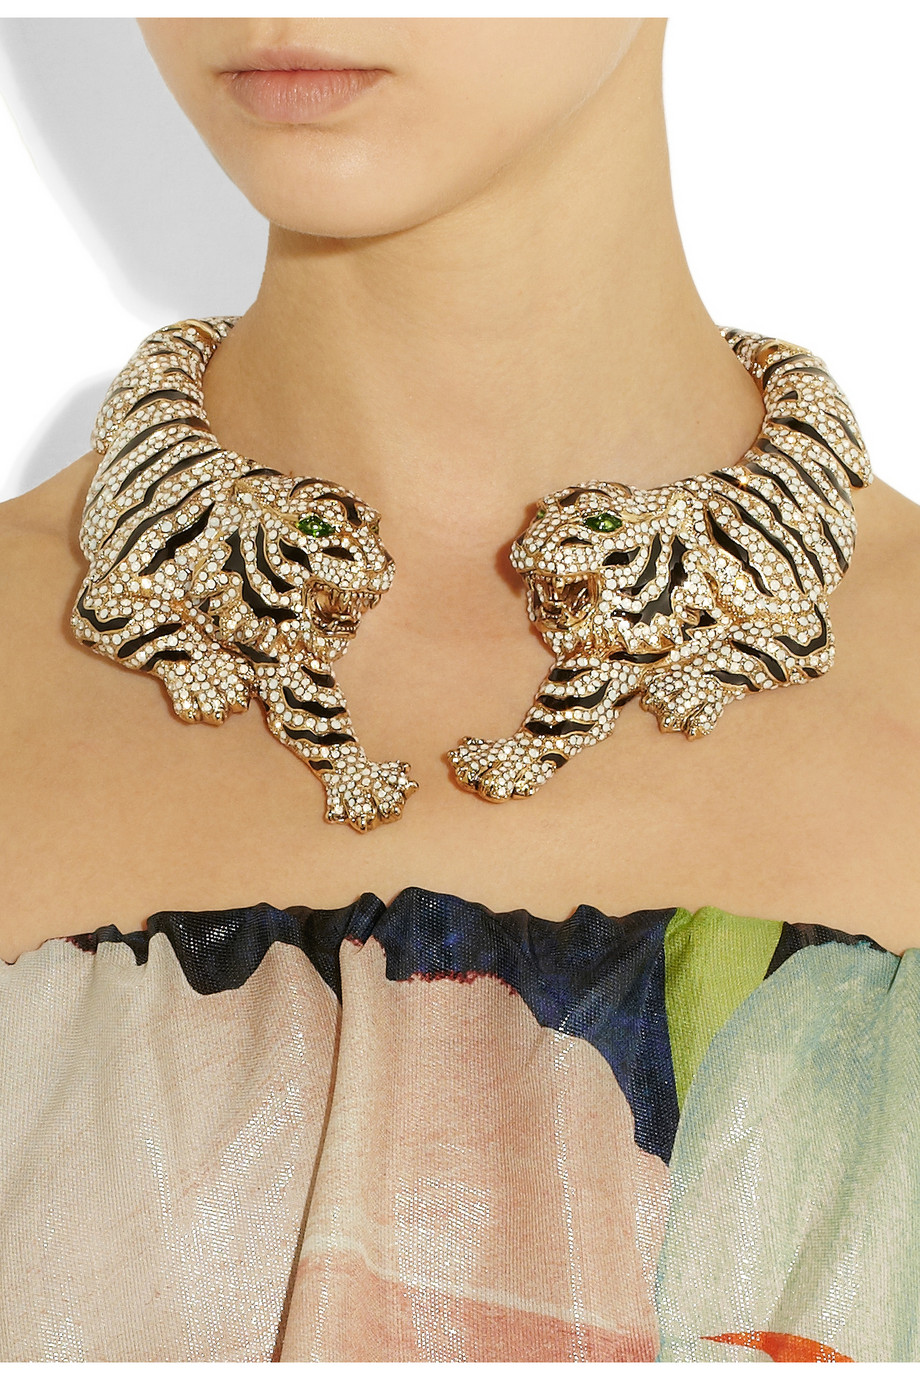 Lyst - Roberto Cavalli Goldplated Swarovski Crystal Tiger Necklace in